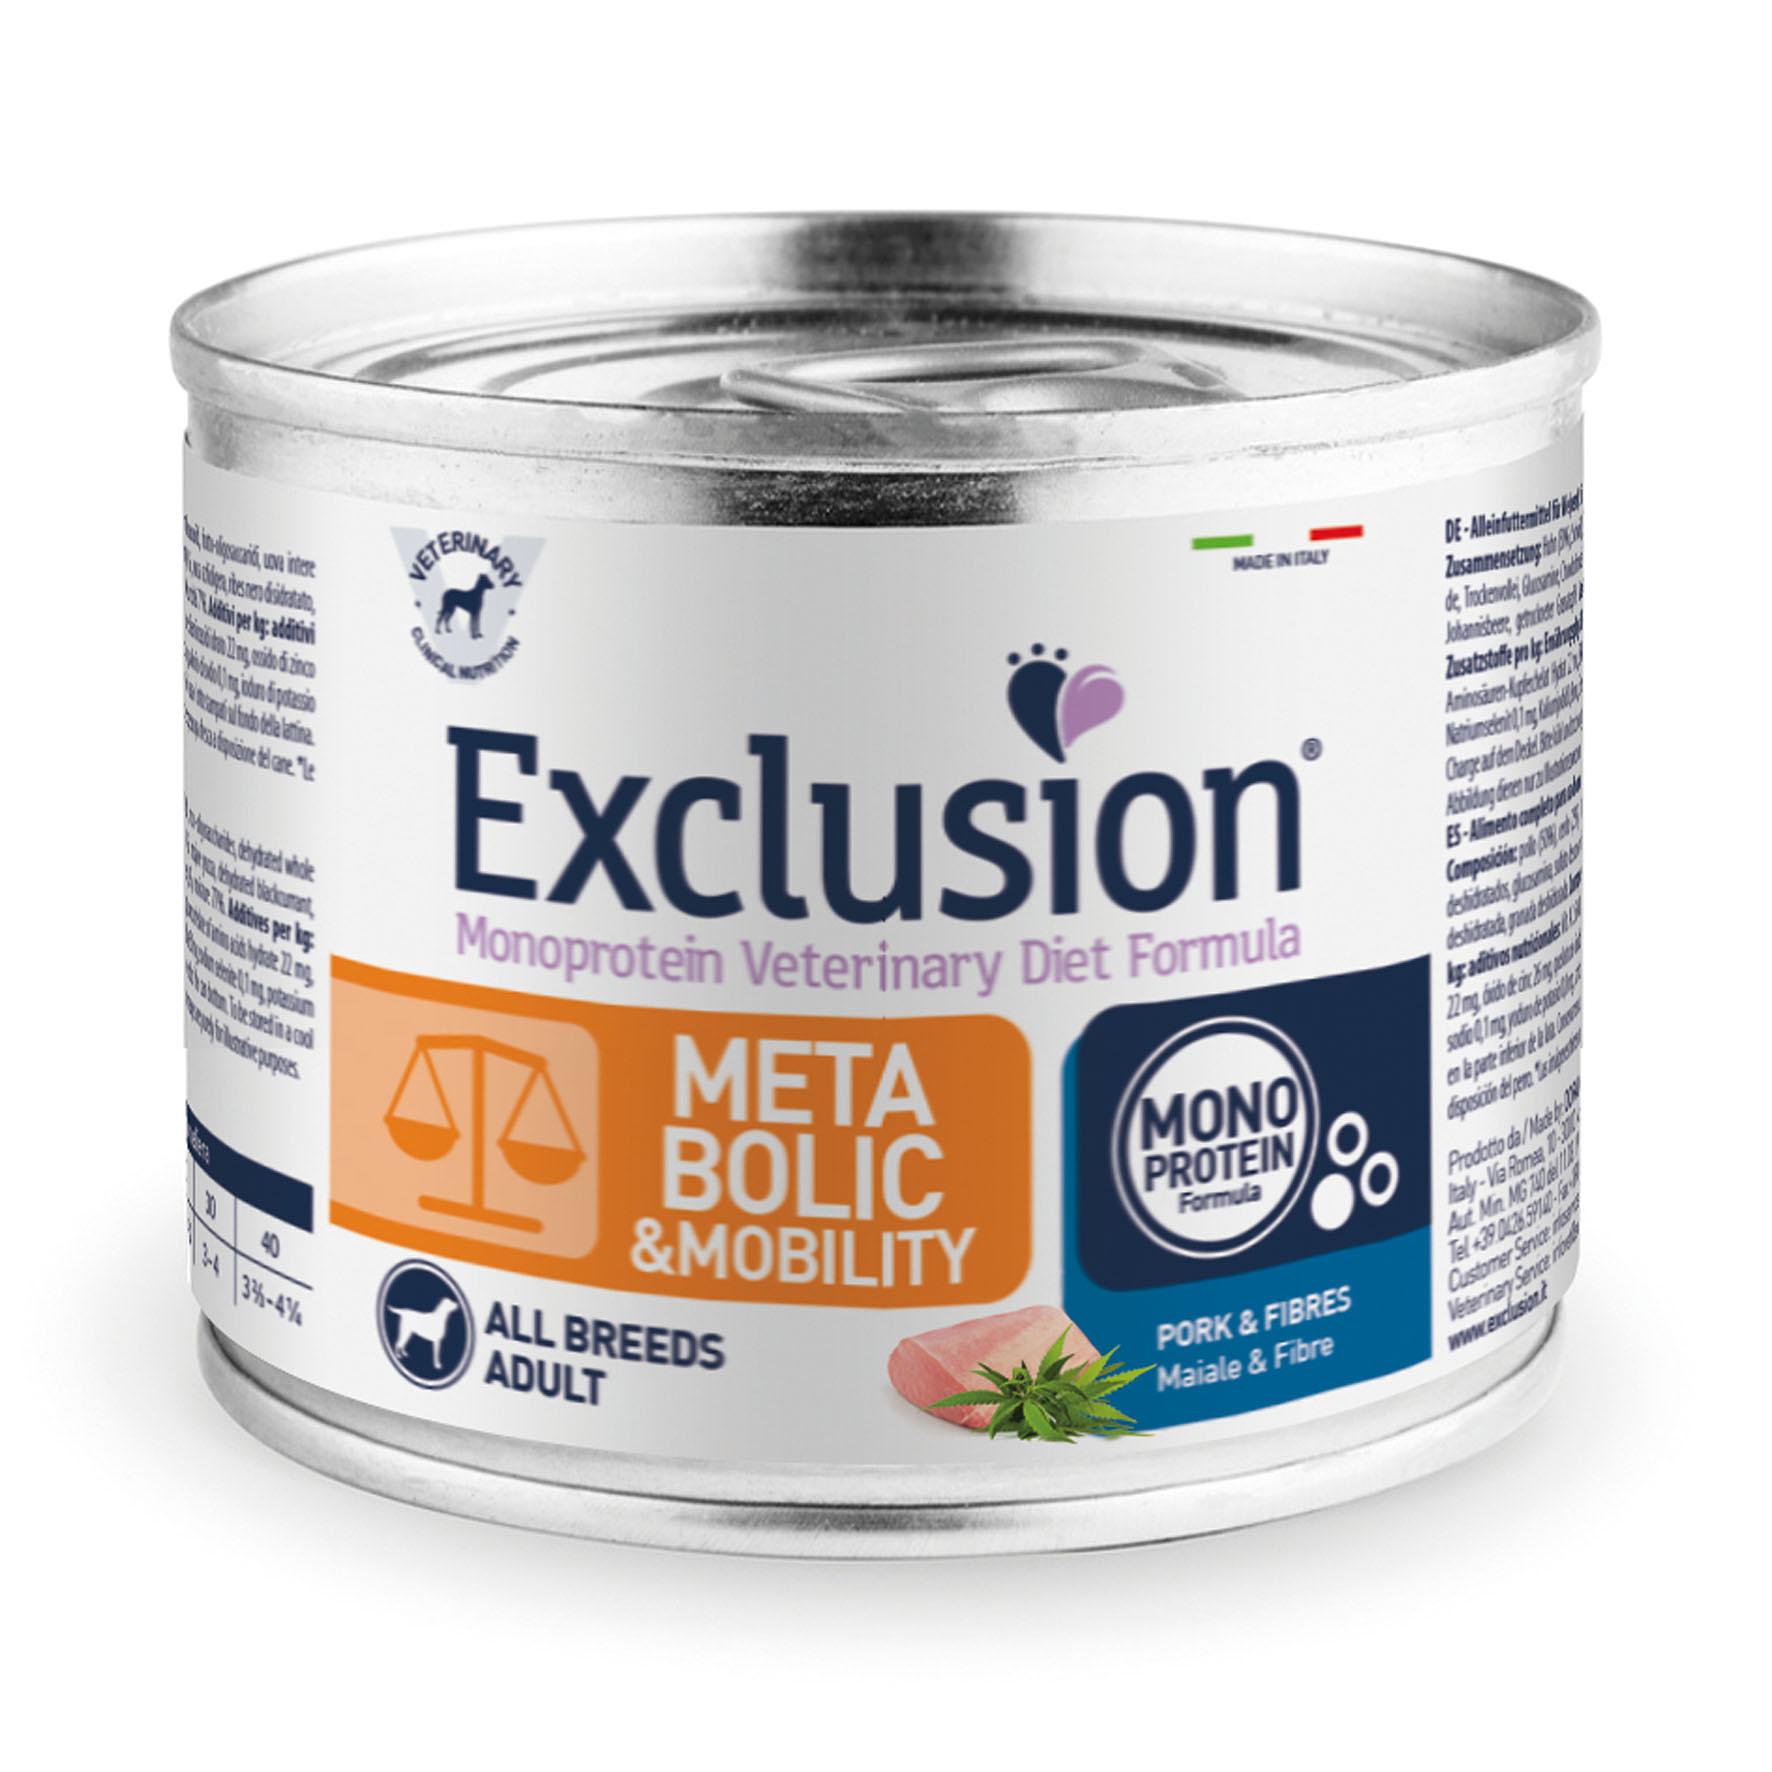 Exclusion Vet Metabolic Adult All Breeds Pork